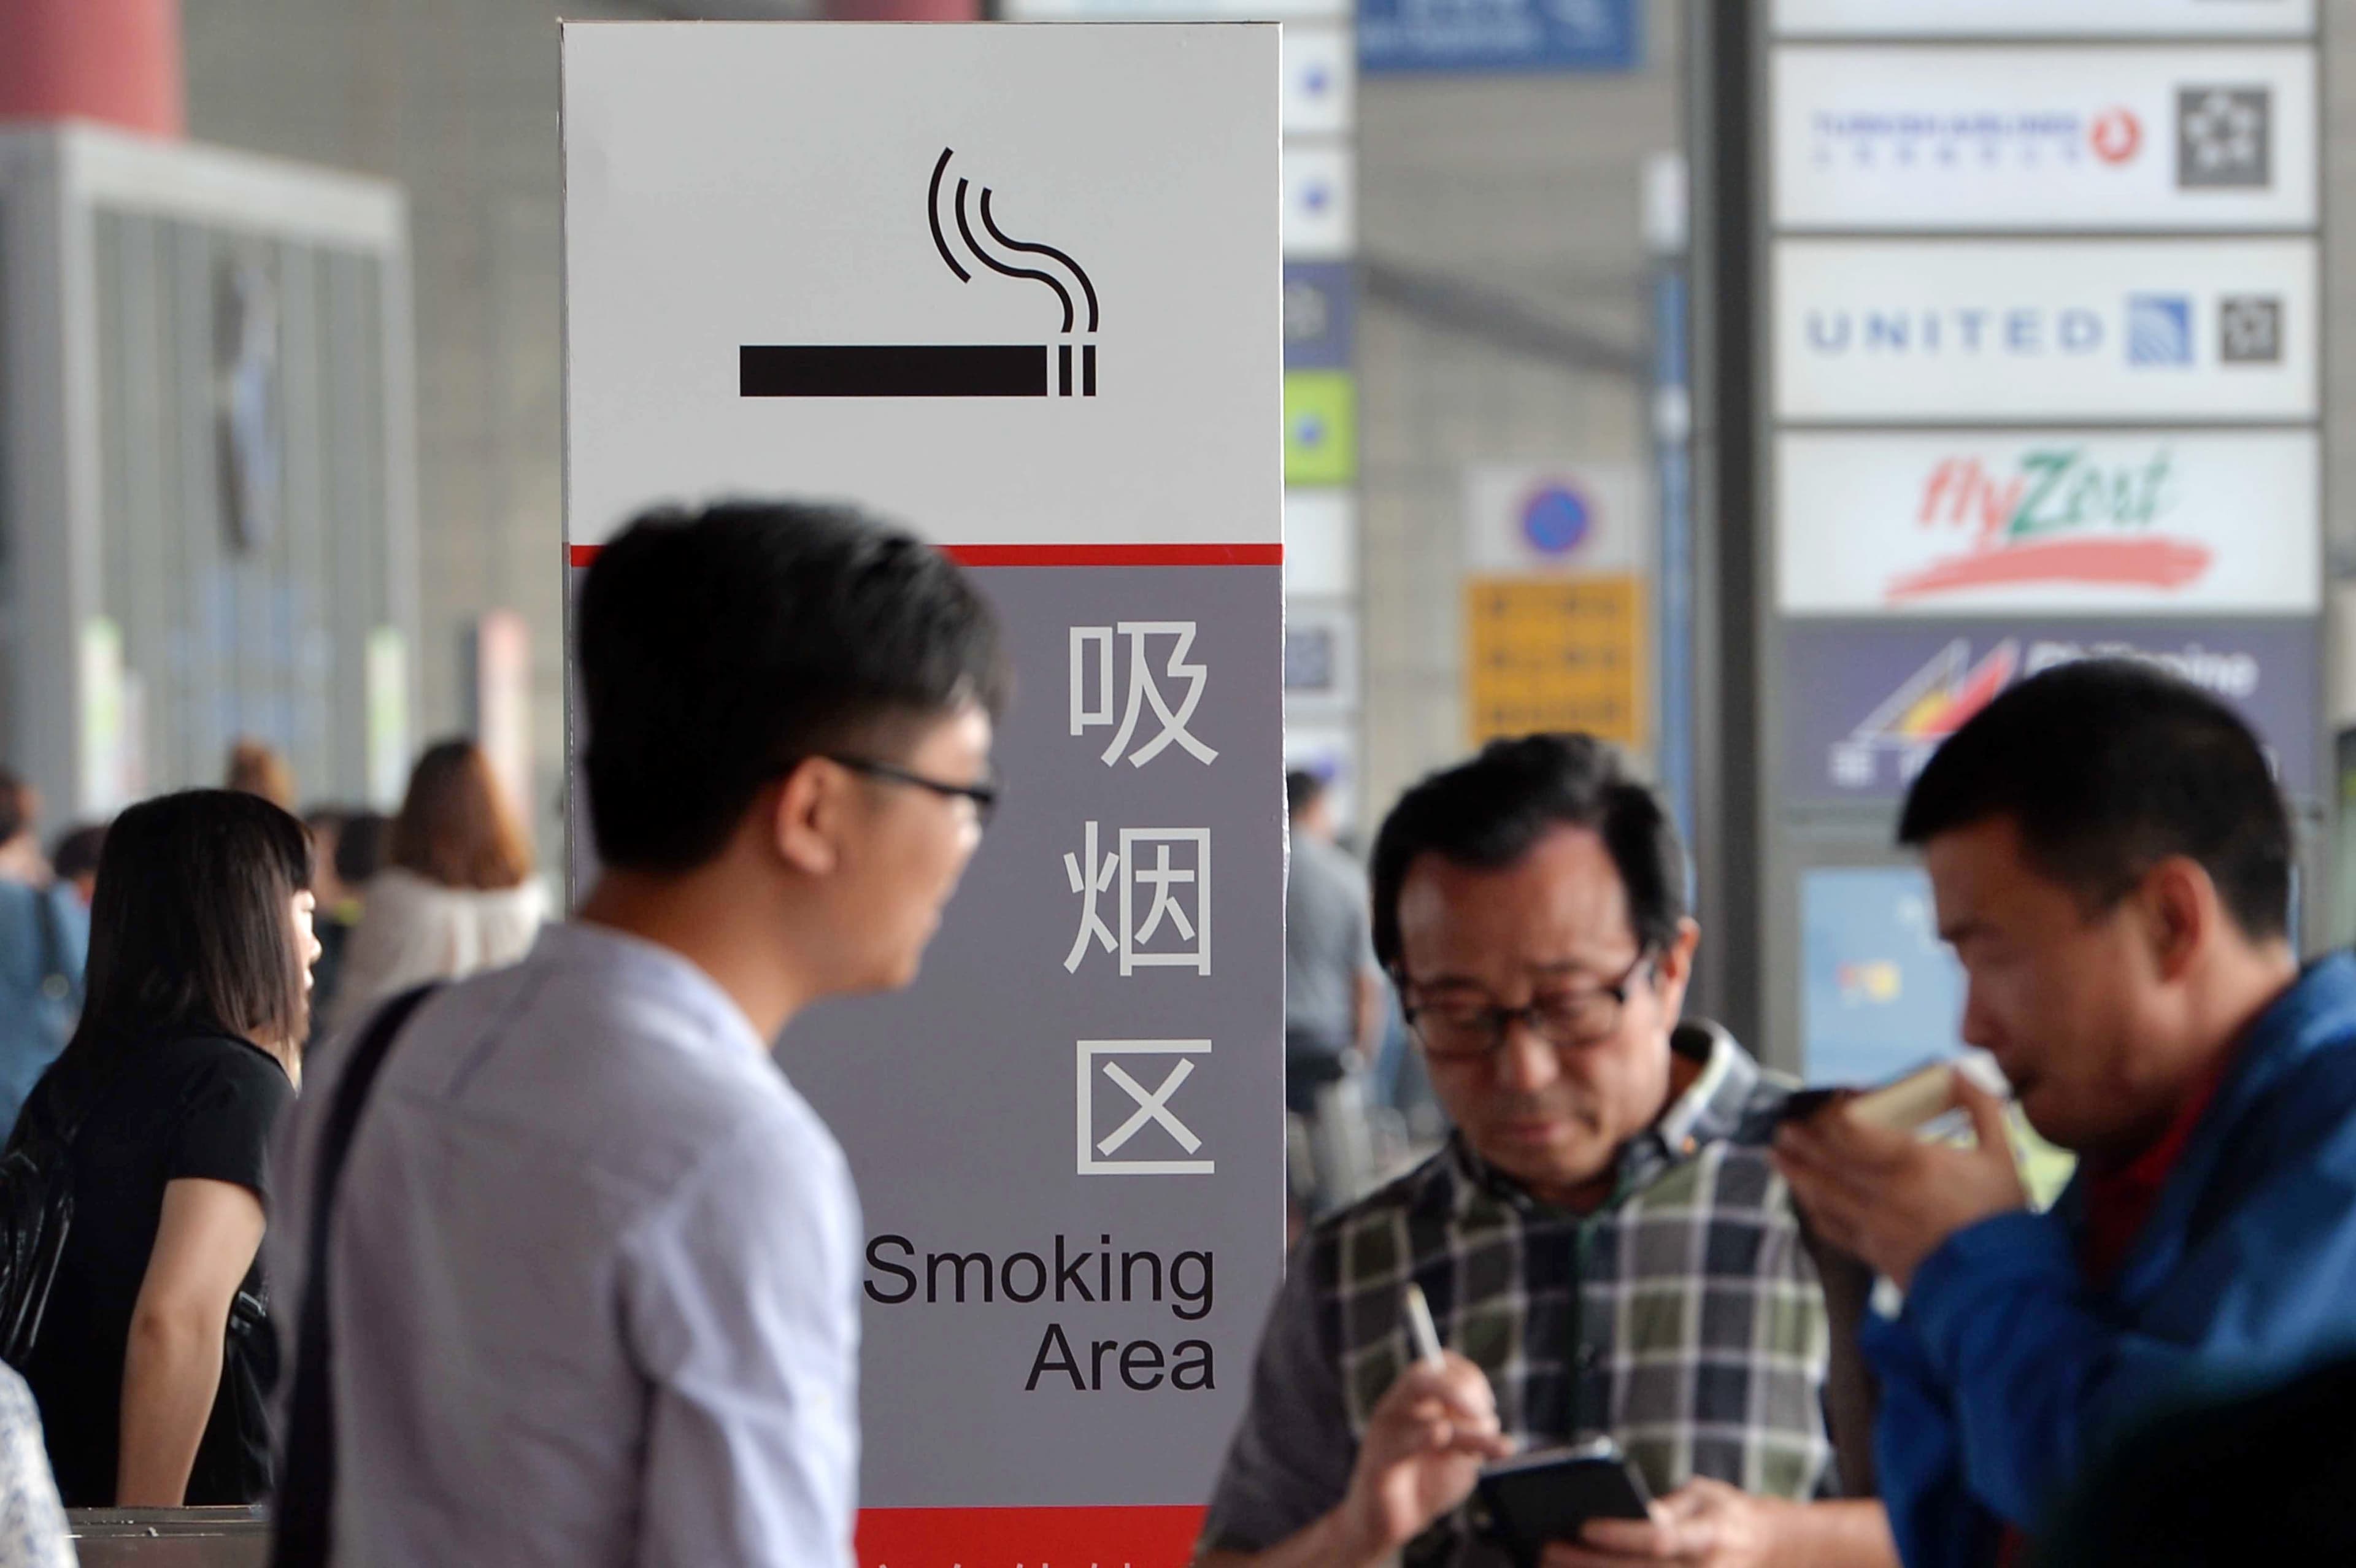 Smoking Still Allowed at Majority of World’s Biggest Airports